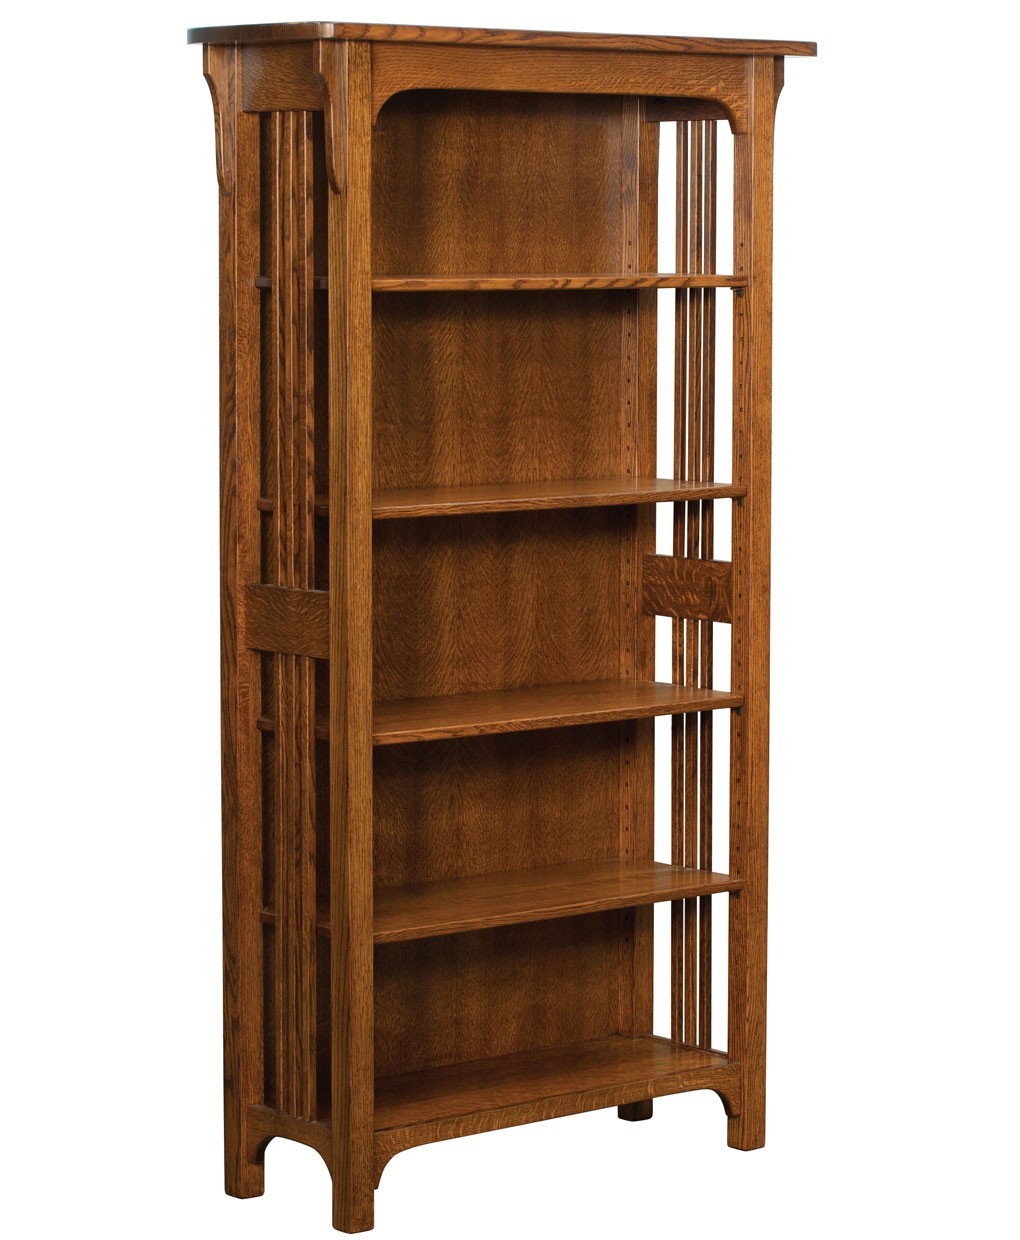 Craftsman mission bookcase amish direct furniture